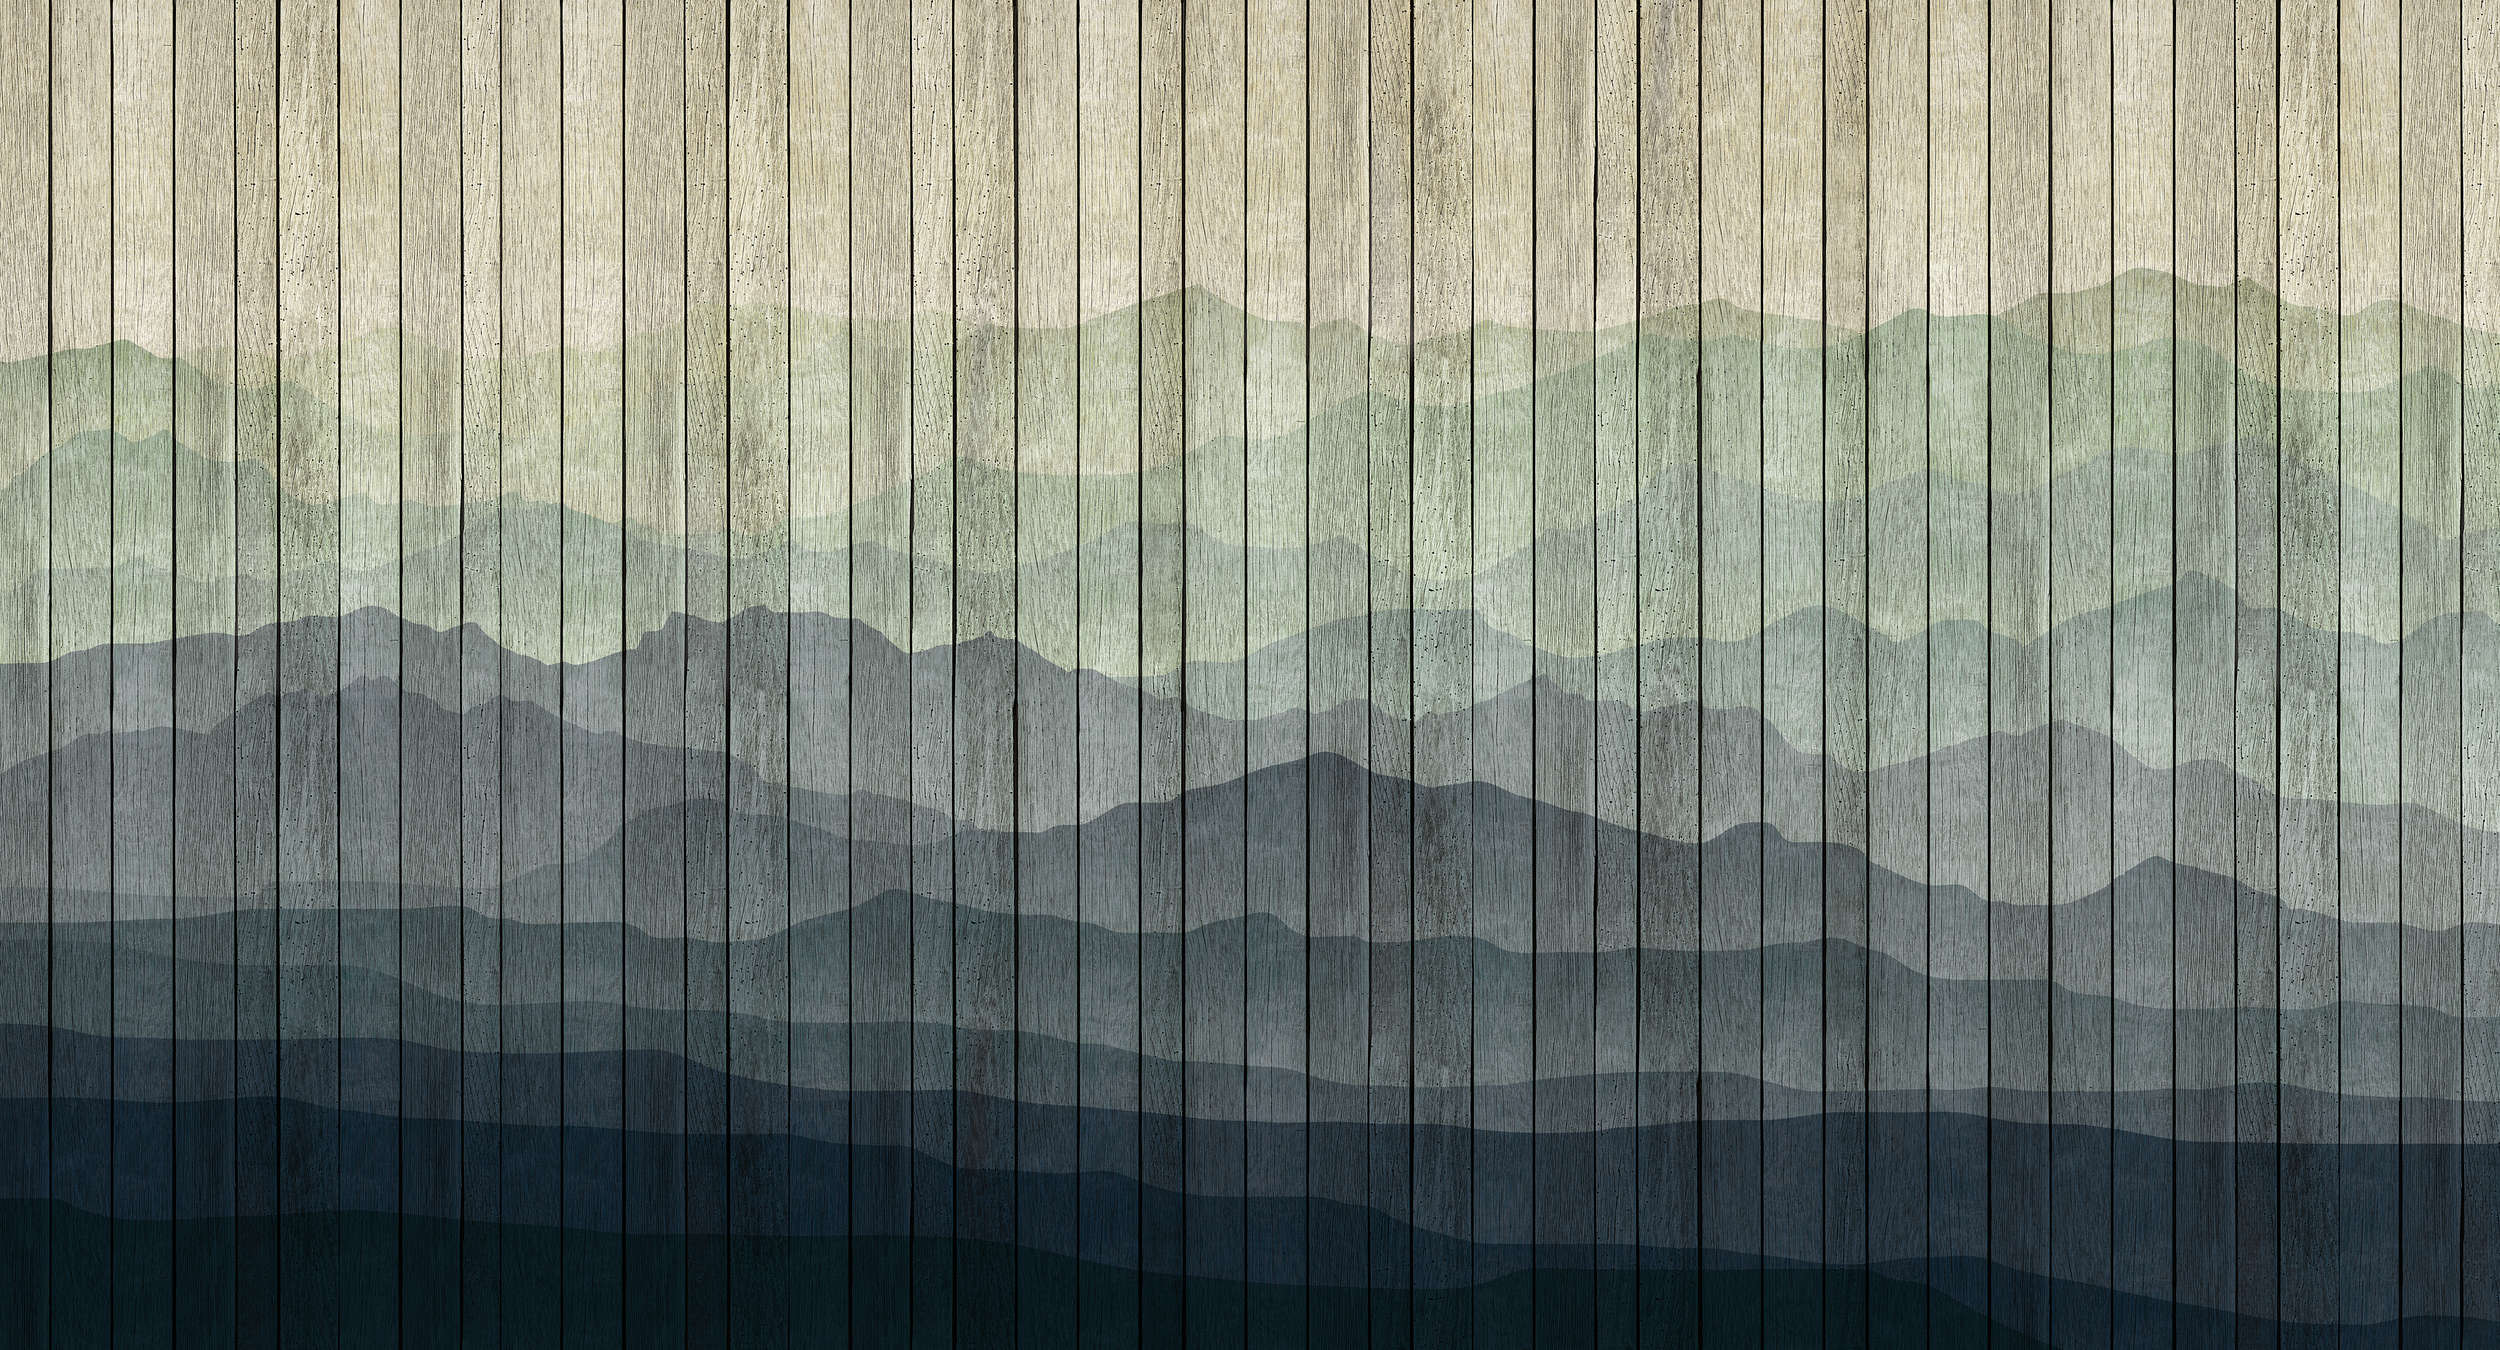             Mountains 1 - Moderne Fototapete Berglandschaft & Bretteroptik – Beige, Blau | Mattes Glattvlies
        